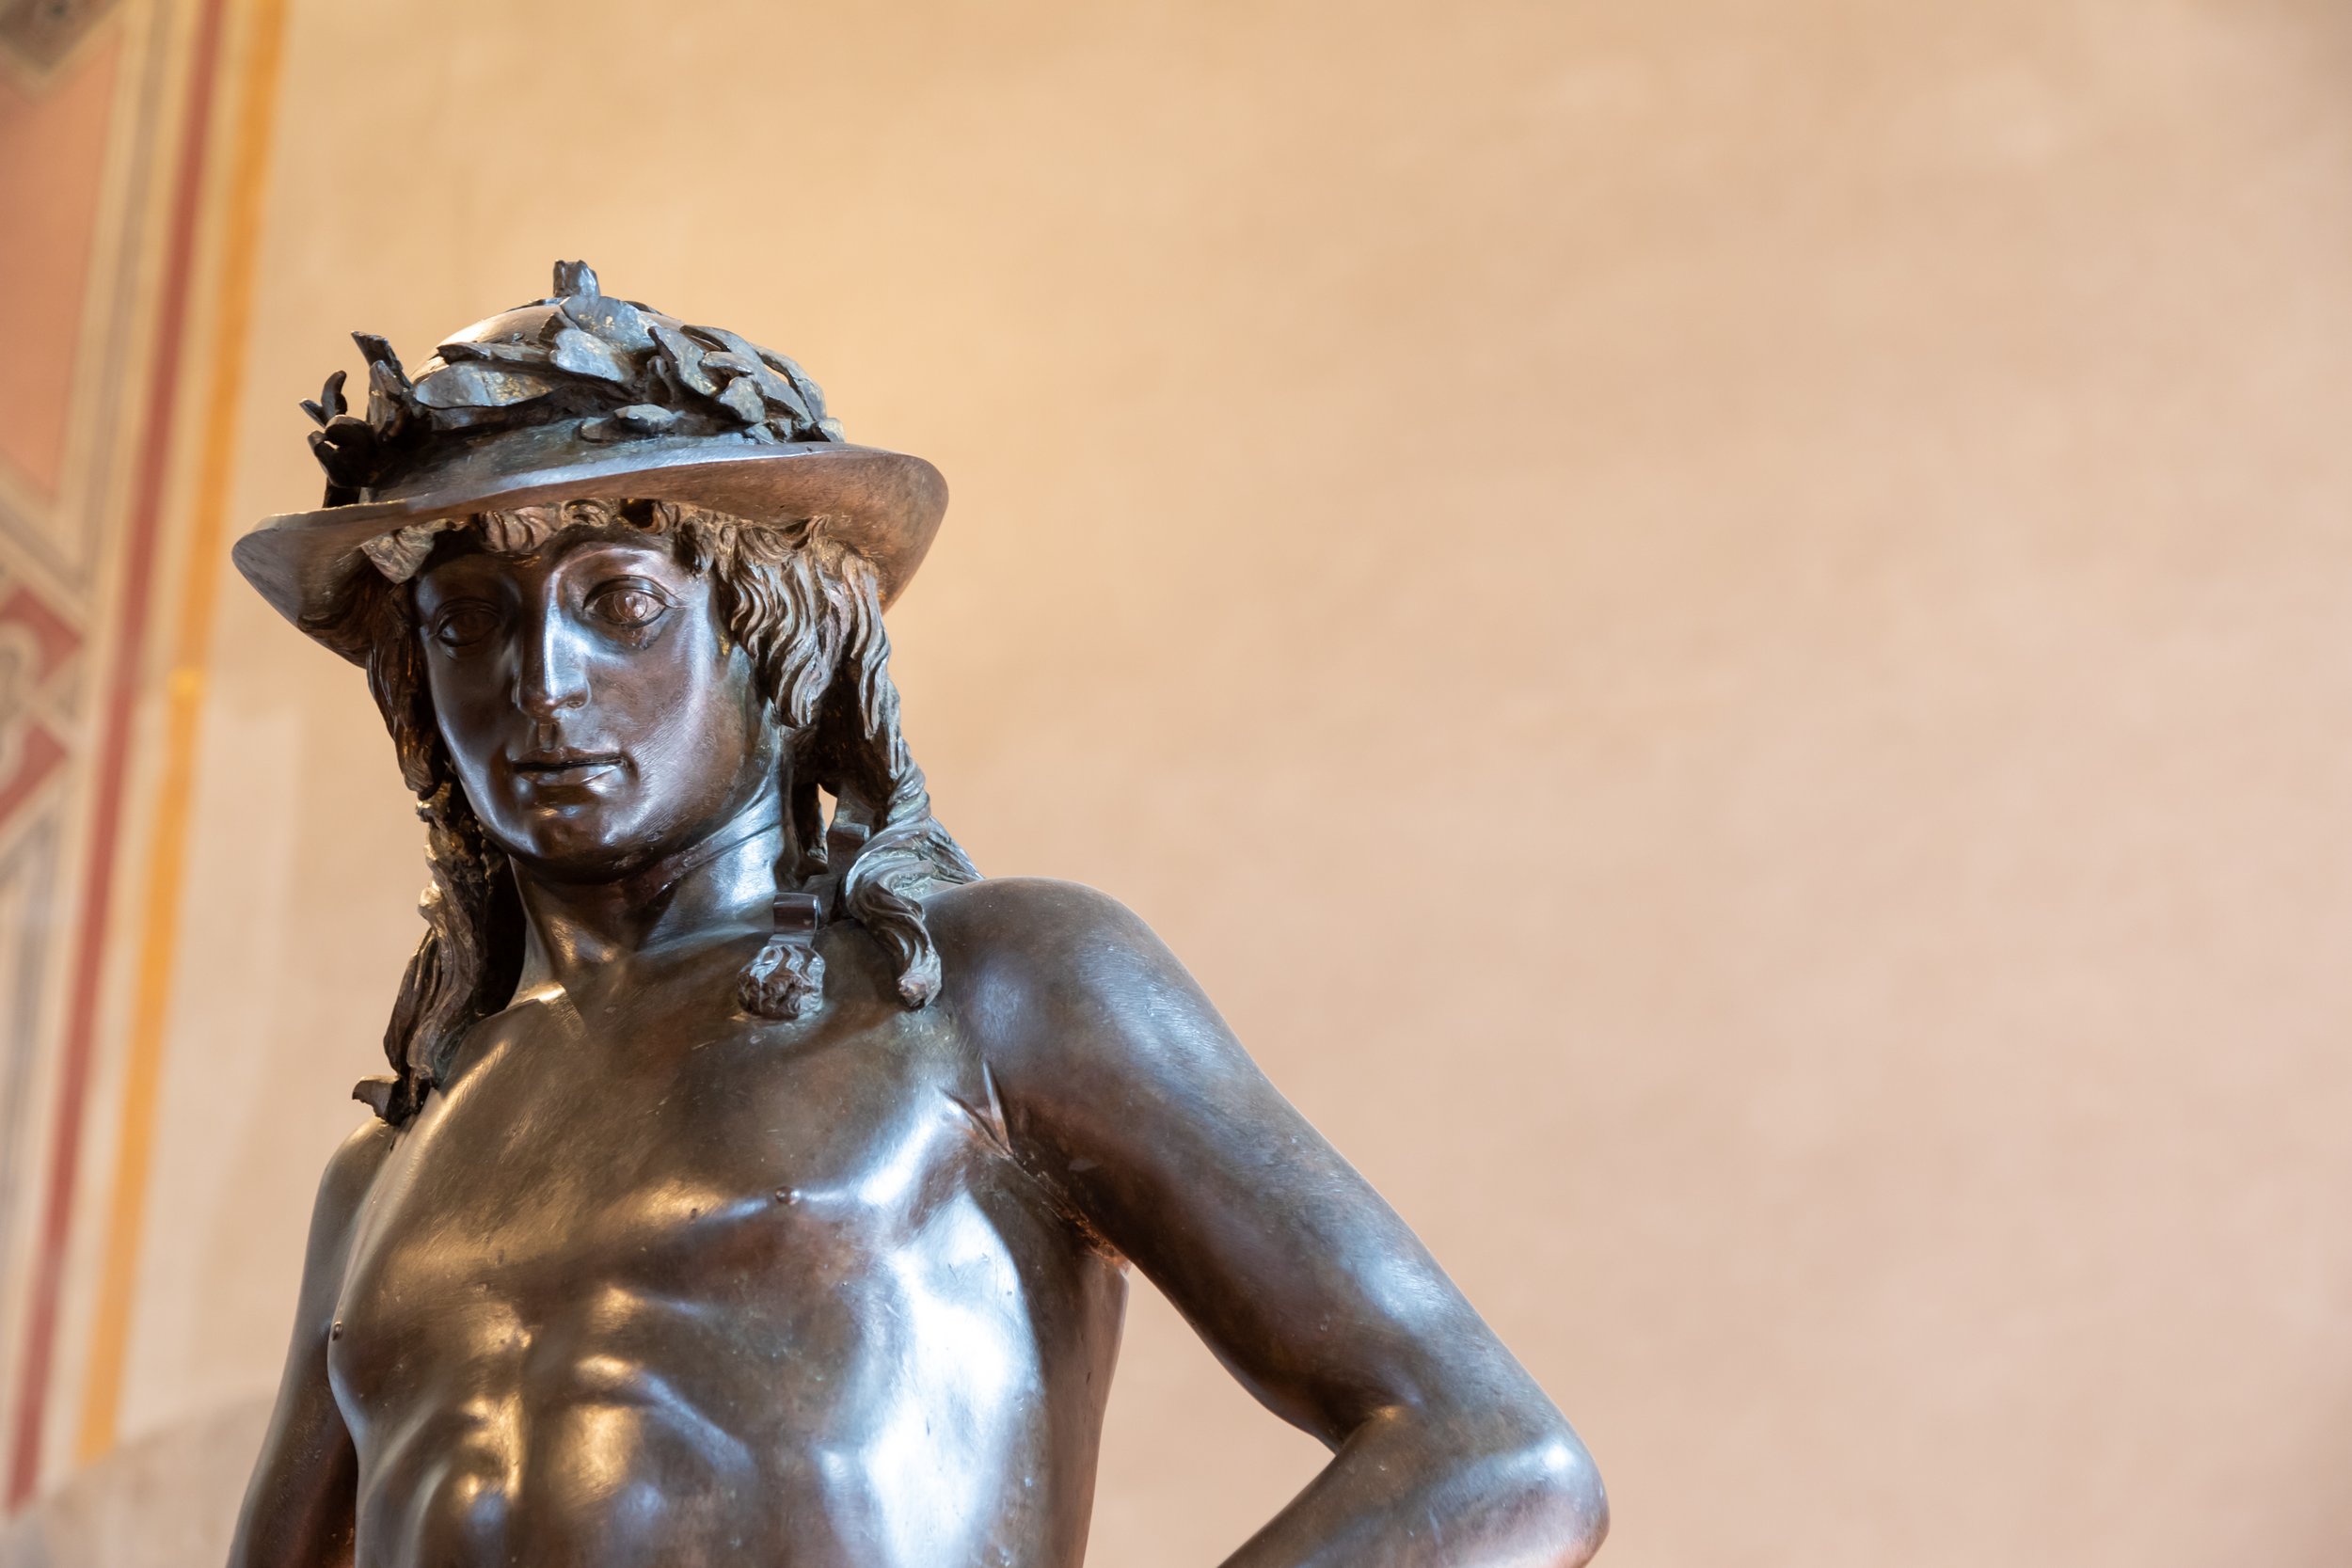 florence-italy-circa-july-2021-david-by-donatello-1469-italian-renaissance-art-first-nude-statue-made-antiquity-donatello-s-masterpiece.jpg